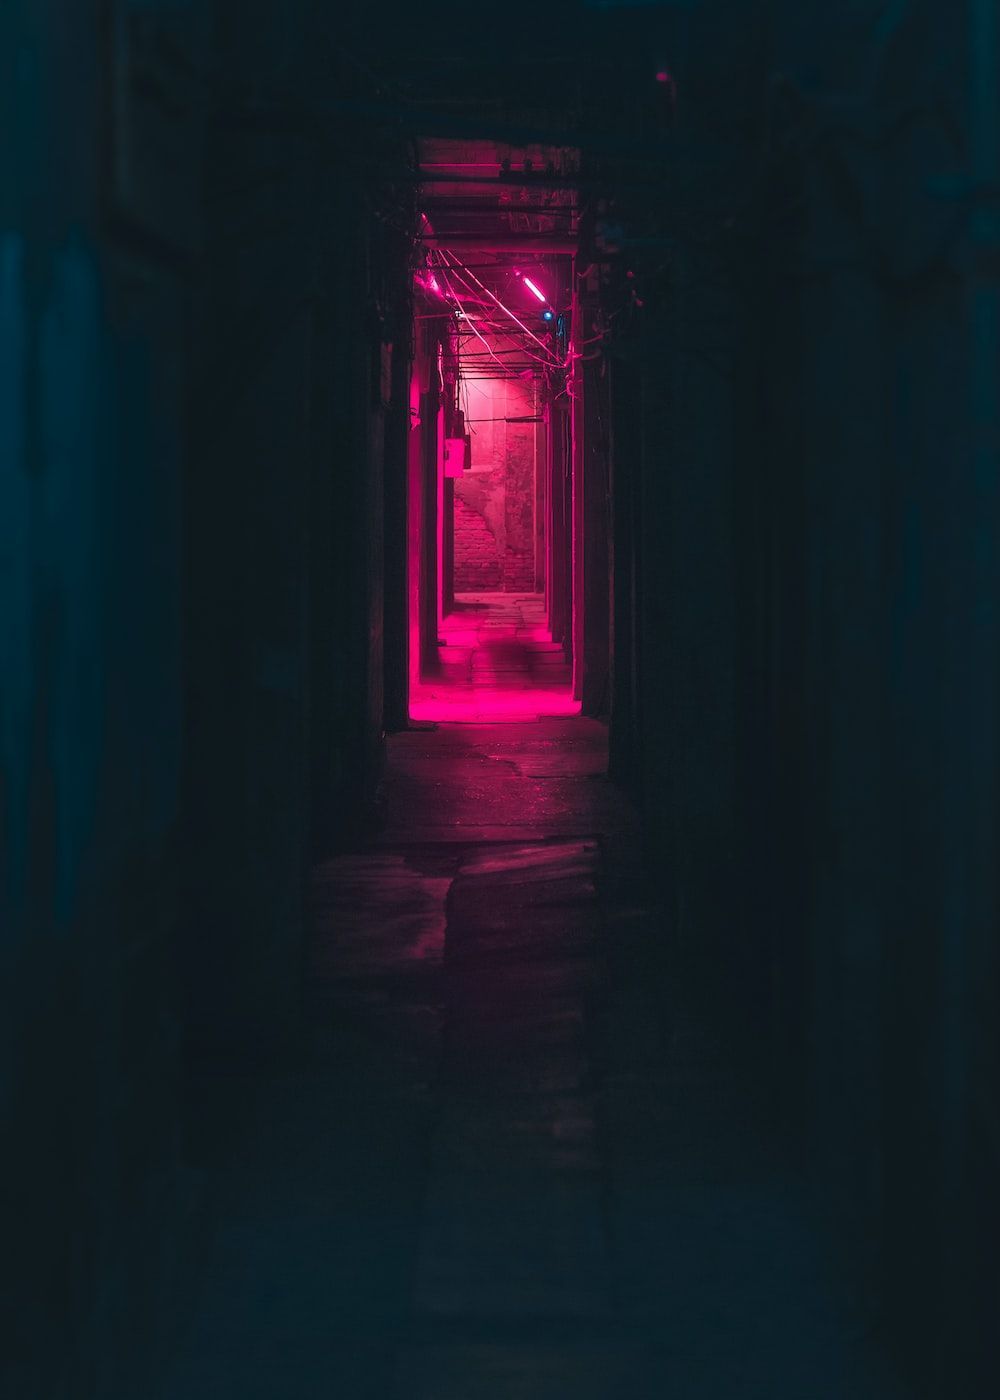 A dark hallway with pink lights. - Cyberpunk